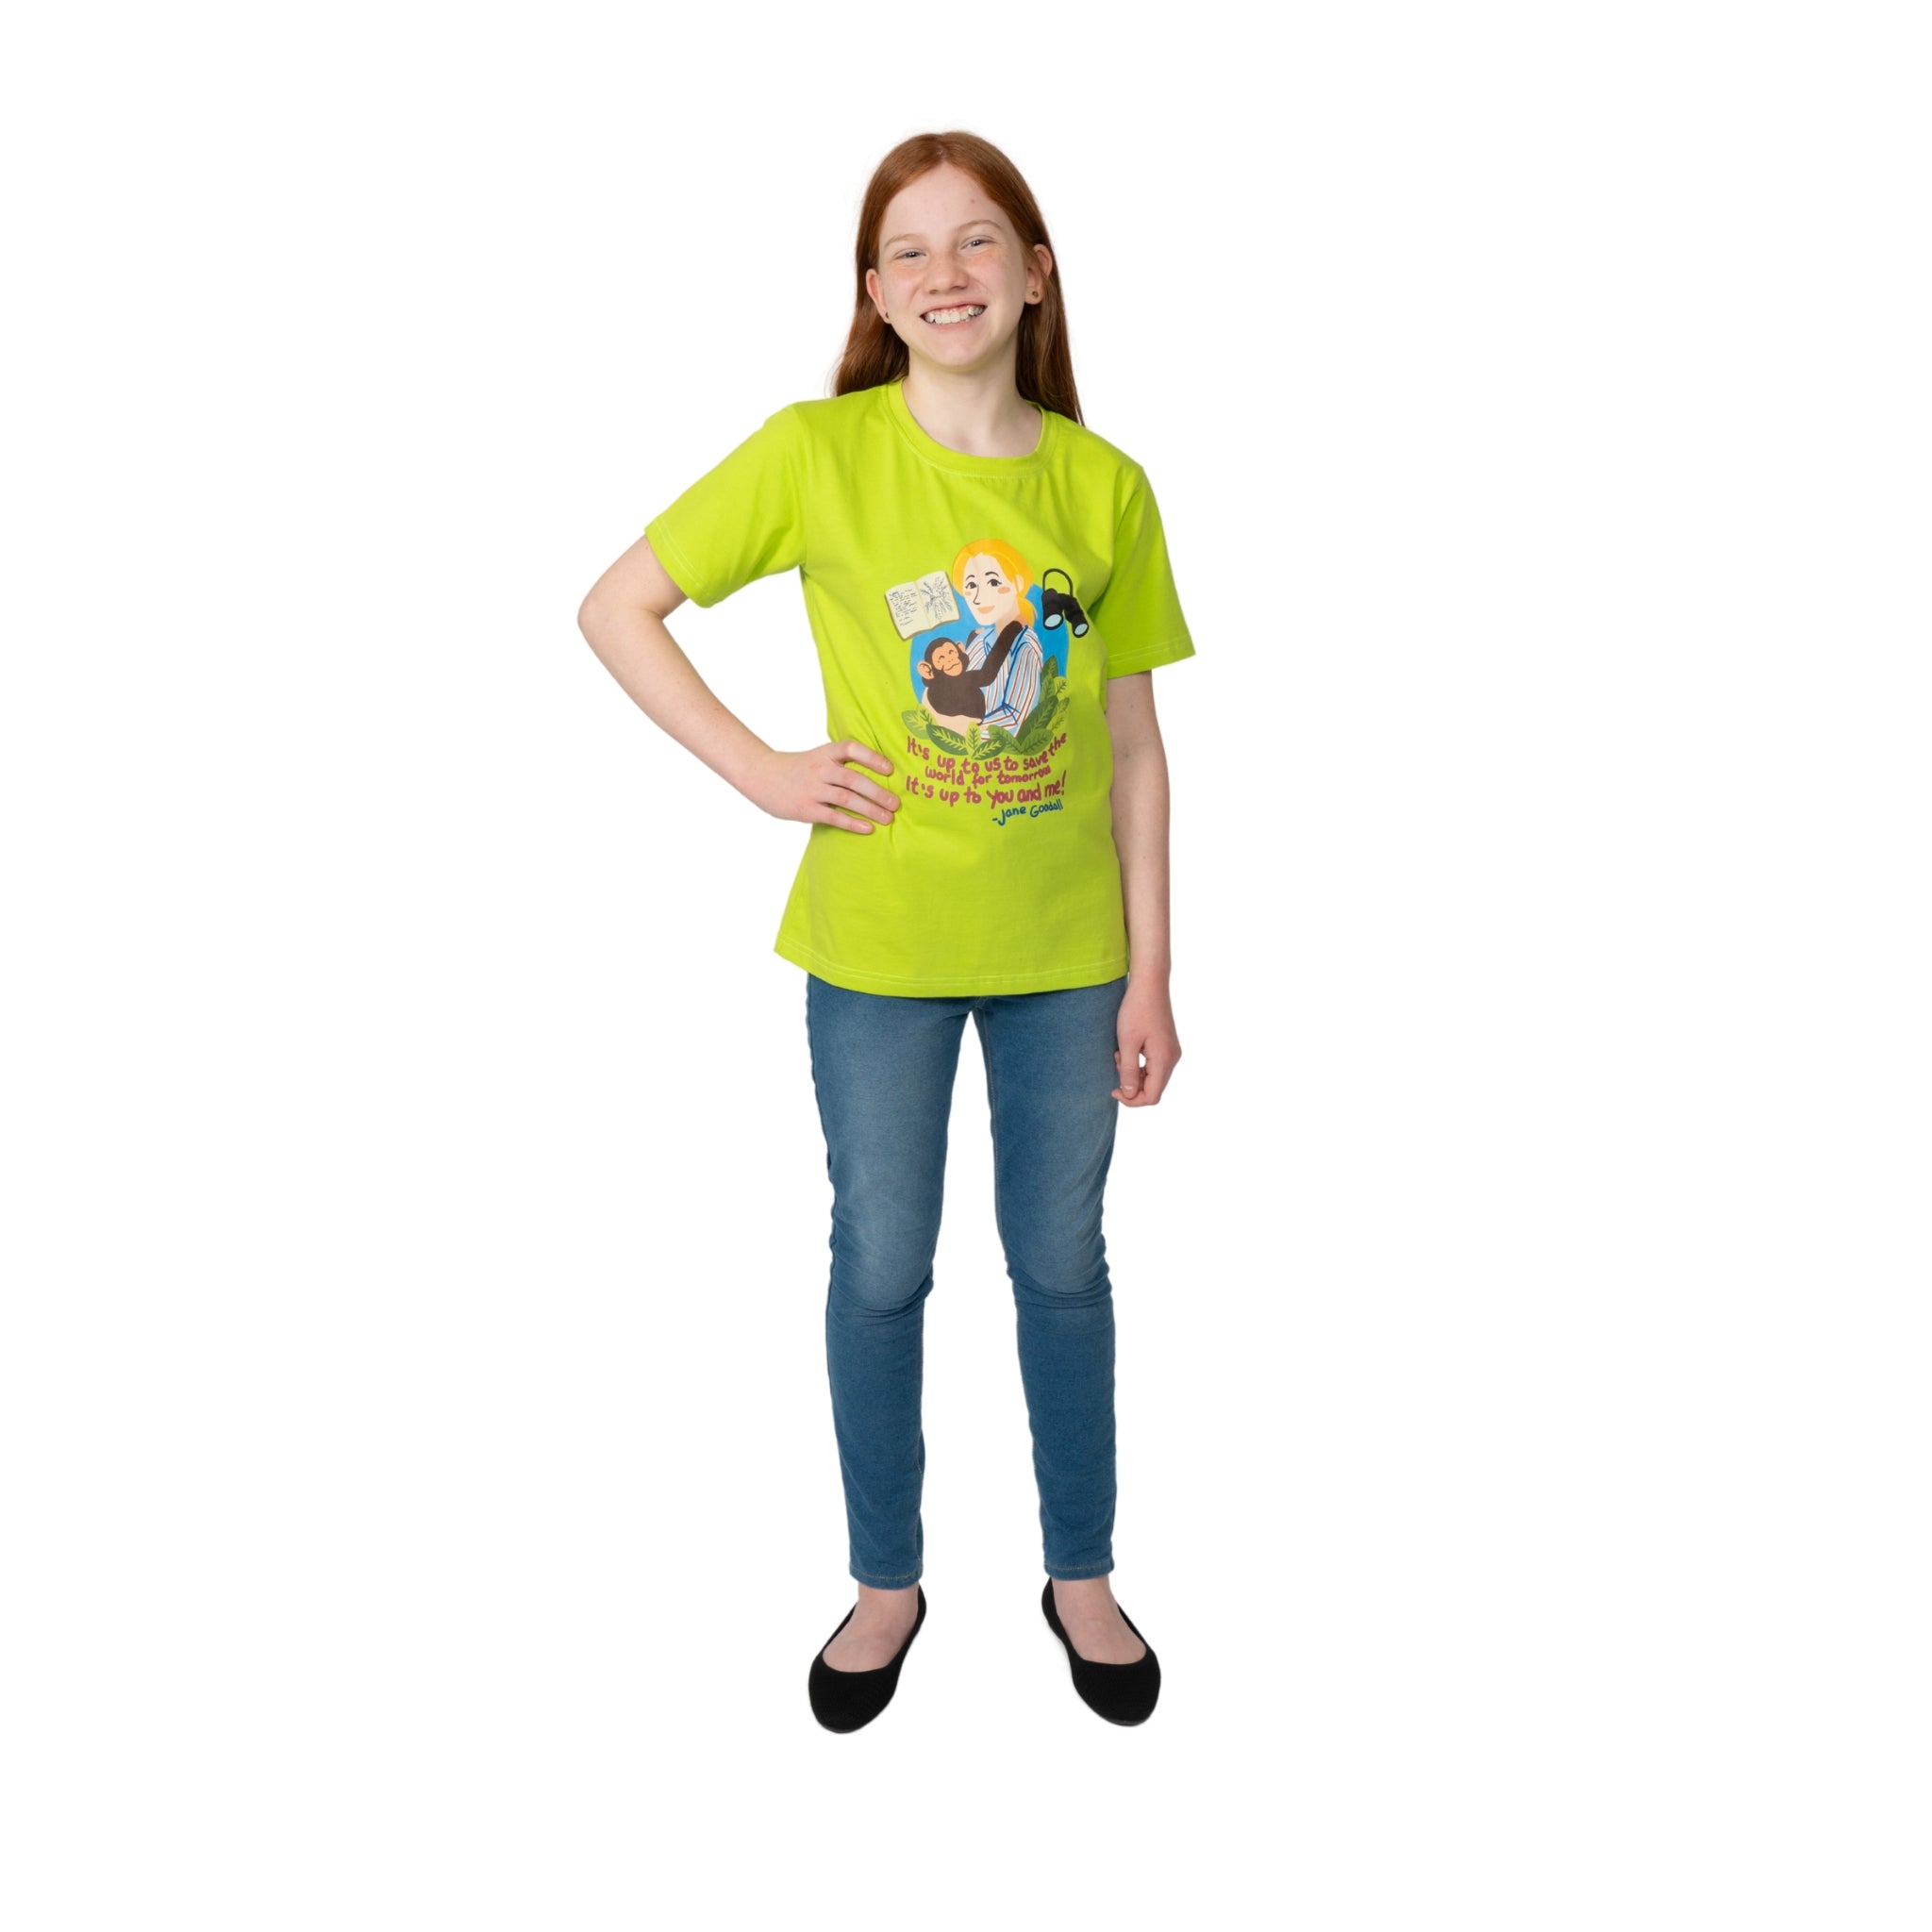 Jane Goodall Kids T-Shirt